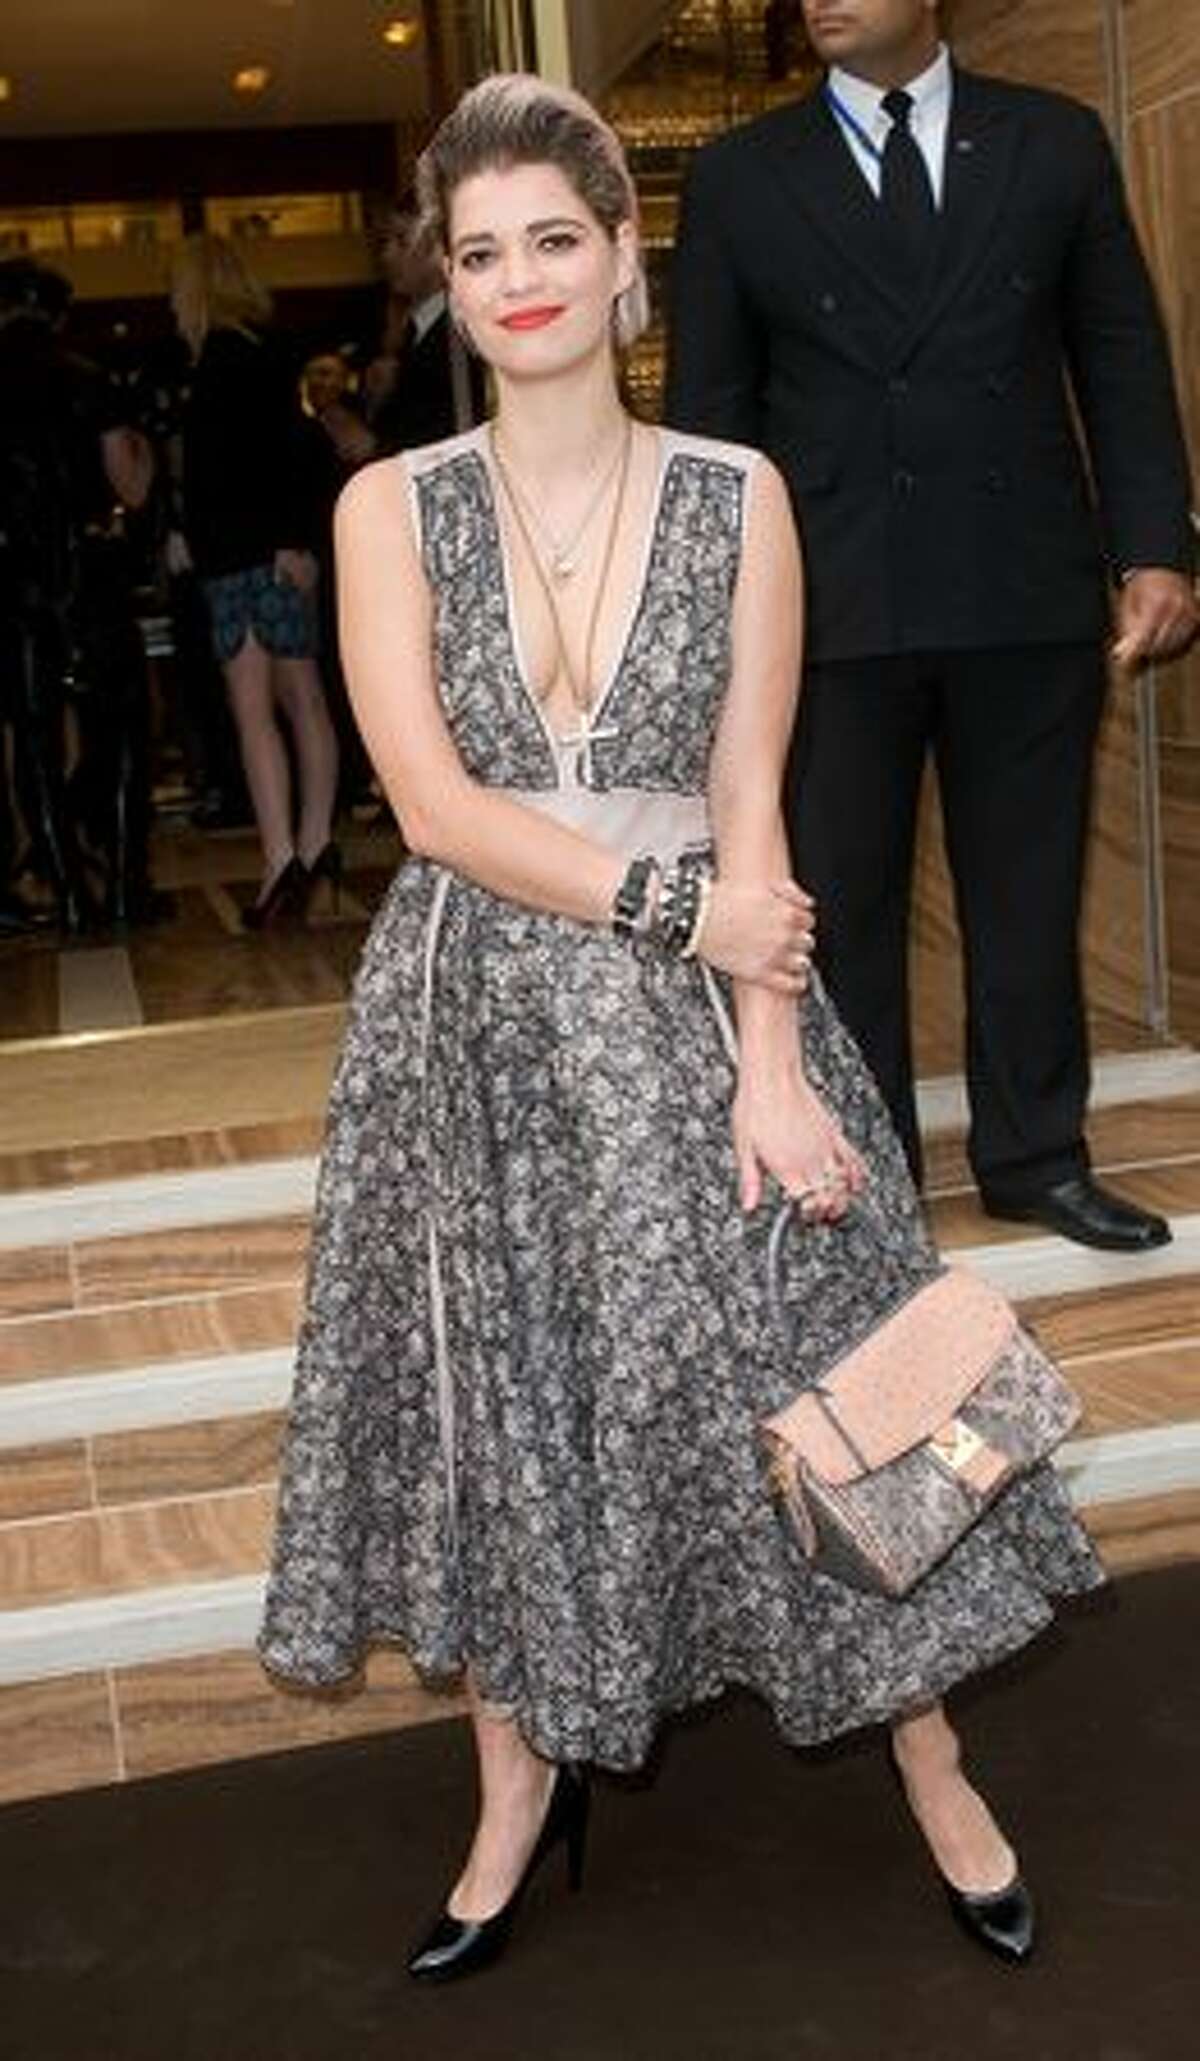 Pixie Geldof arrives at the Louis Vuitton Bond Street Maison launch on New Bond Street.